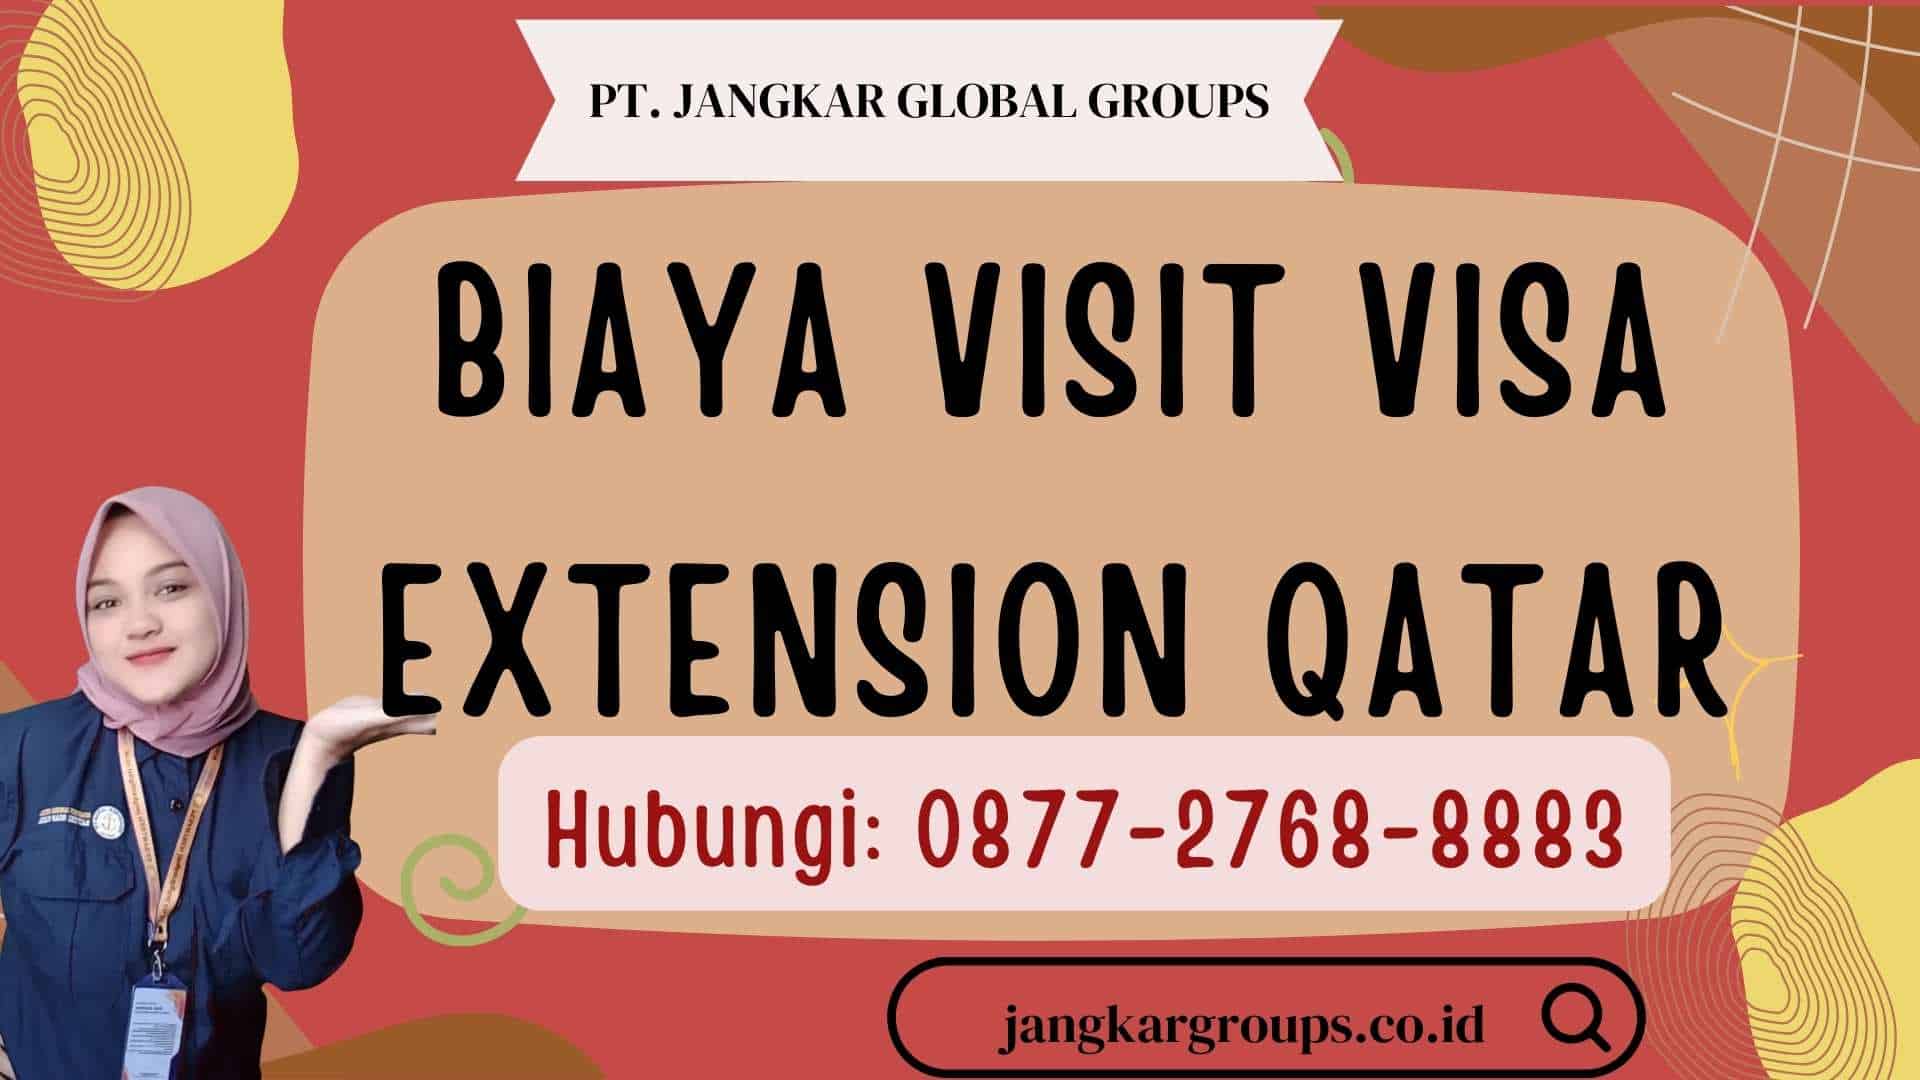 Biaya Visit Visa Extension Qatar